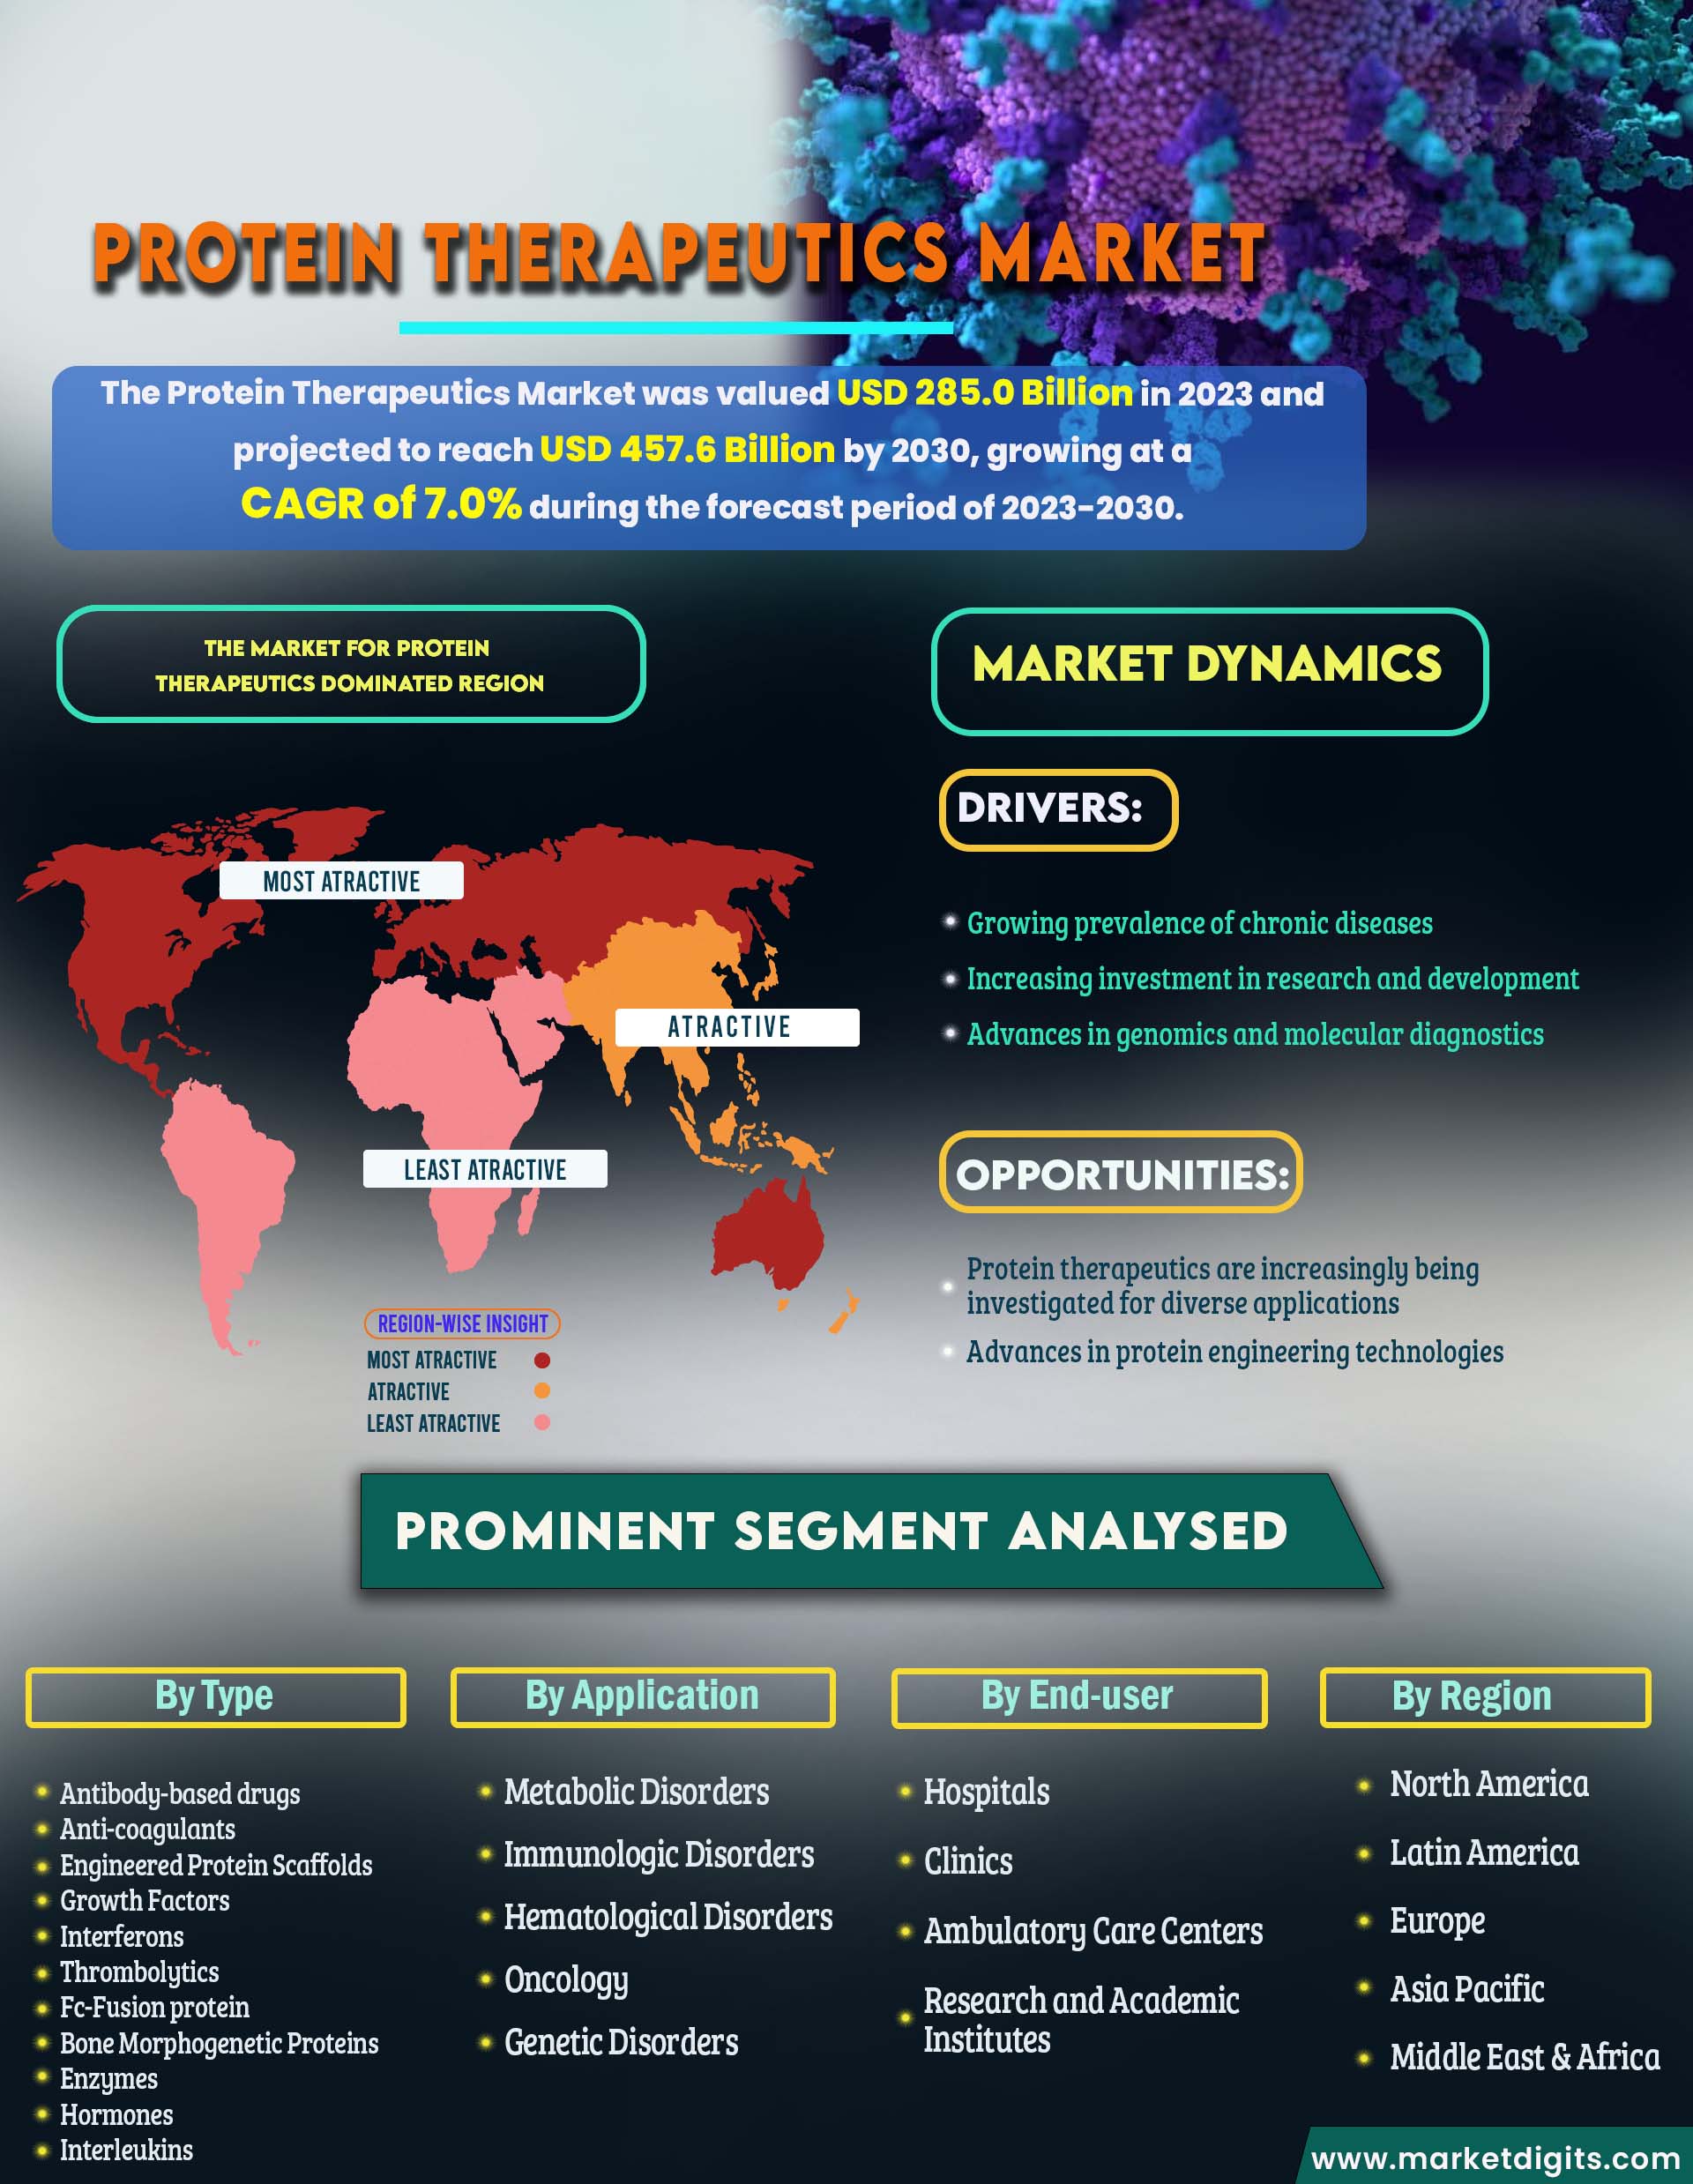 Protein Therapeutics Market